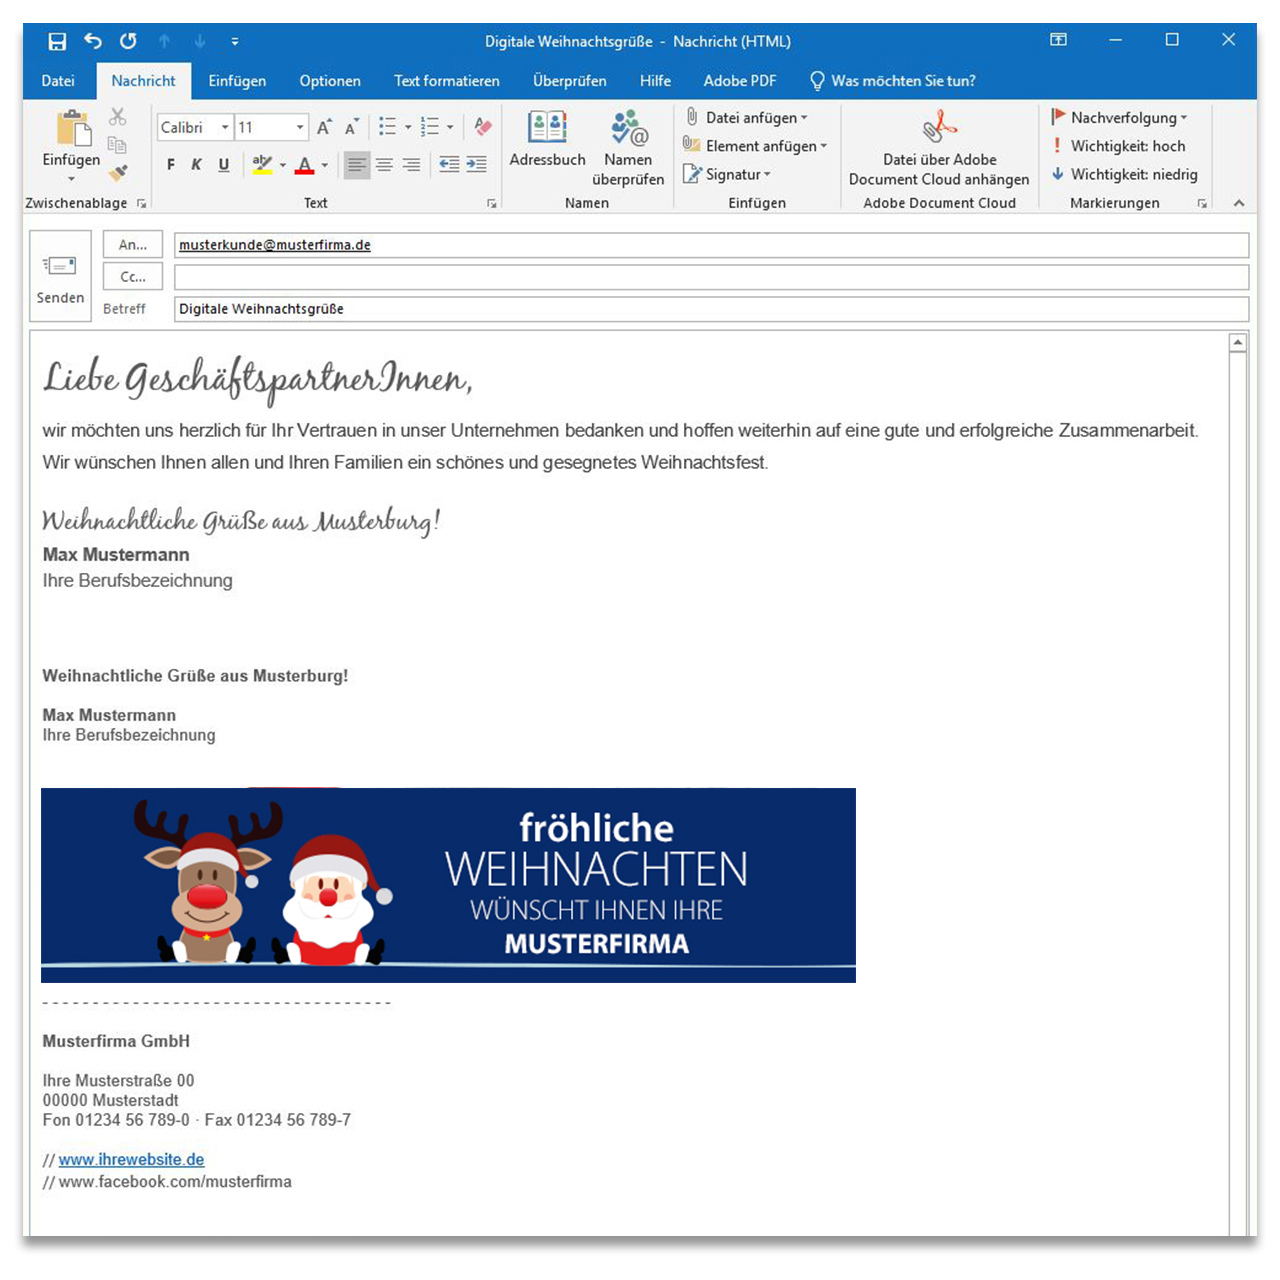 E-Mail-Signatur "Weihnachtsteam" title=